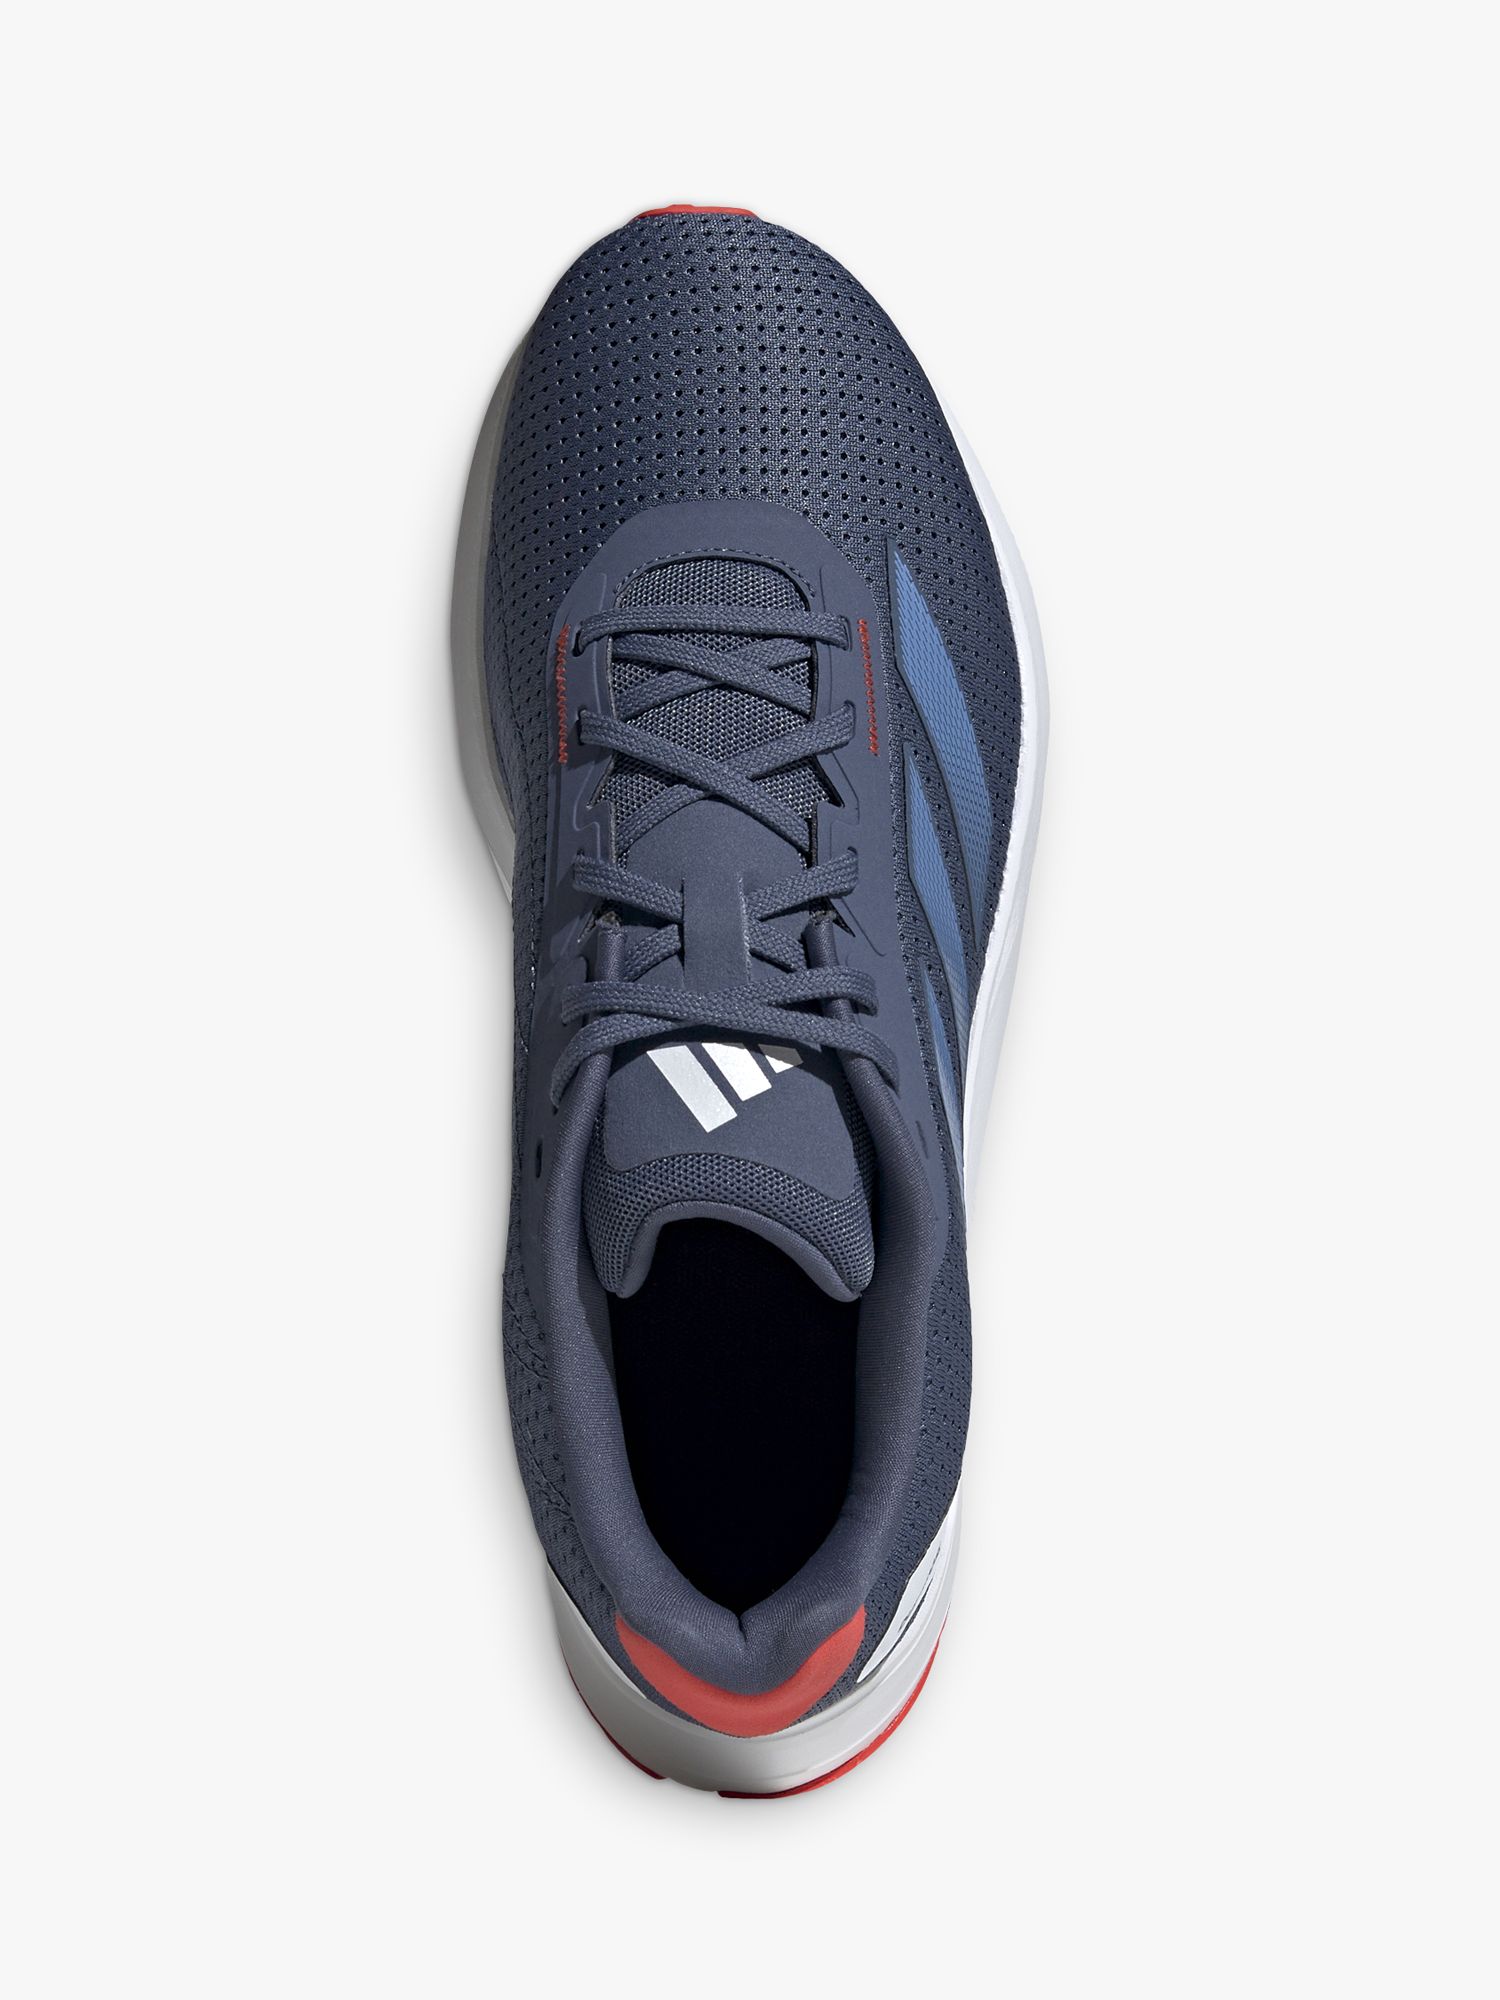 adidas Men's Duramo SL Trainers , Blue/Bright Red, 7.5